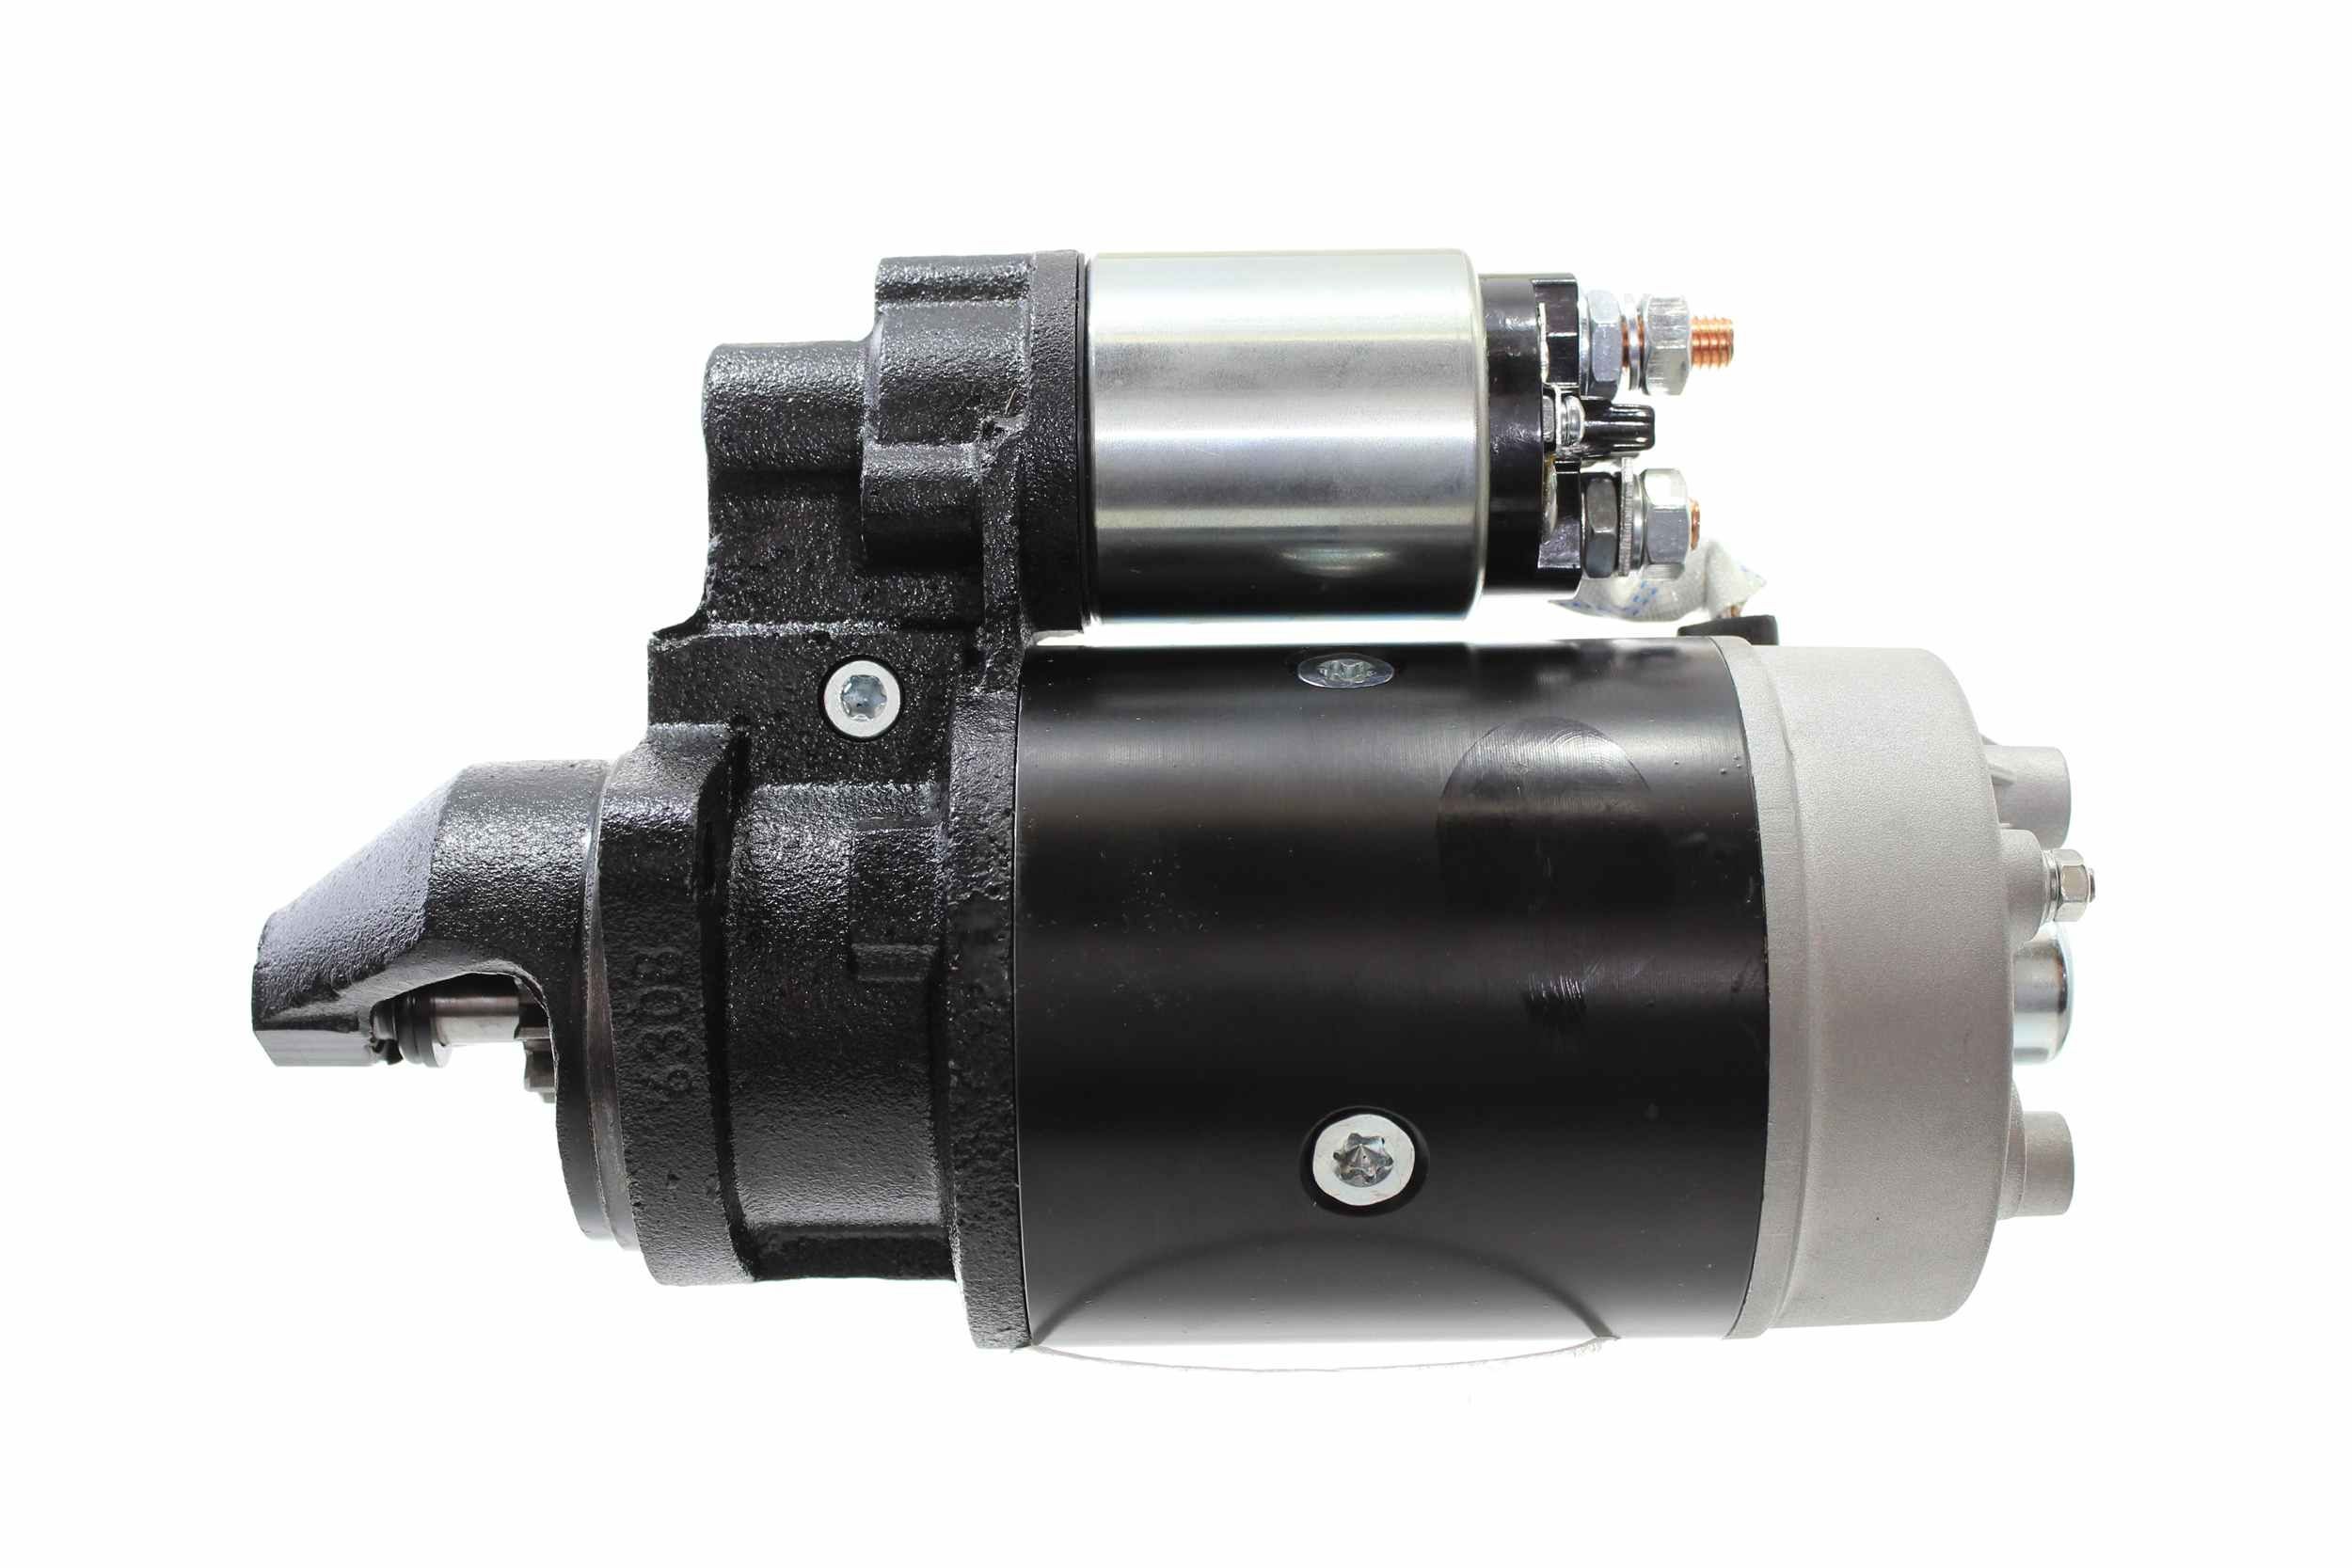 10438802 Engine starter motor ALANKO STR50375 review and test